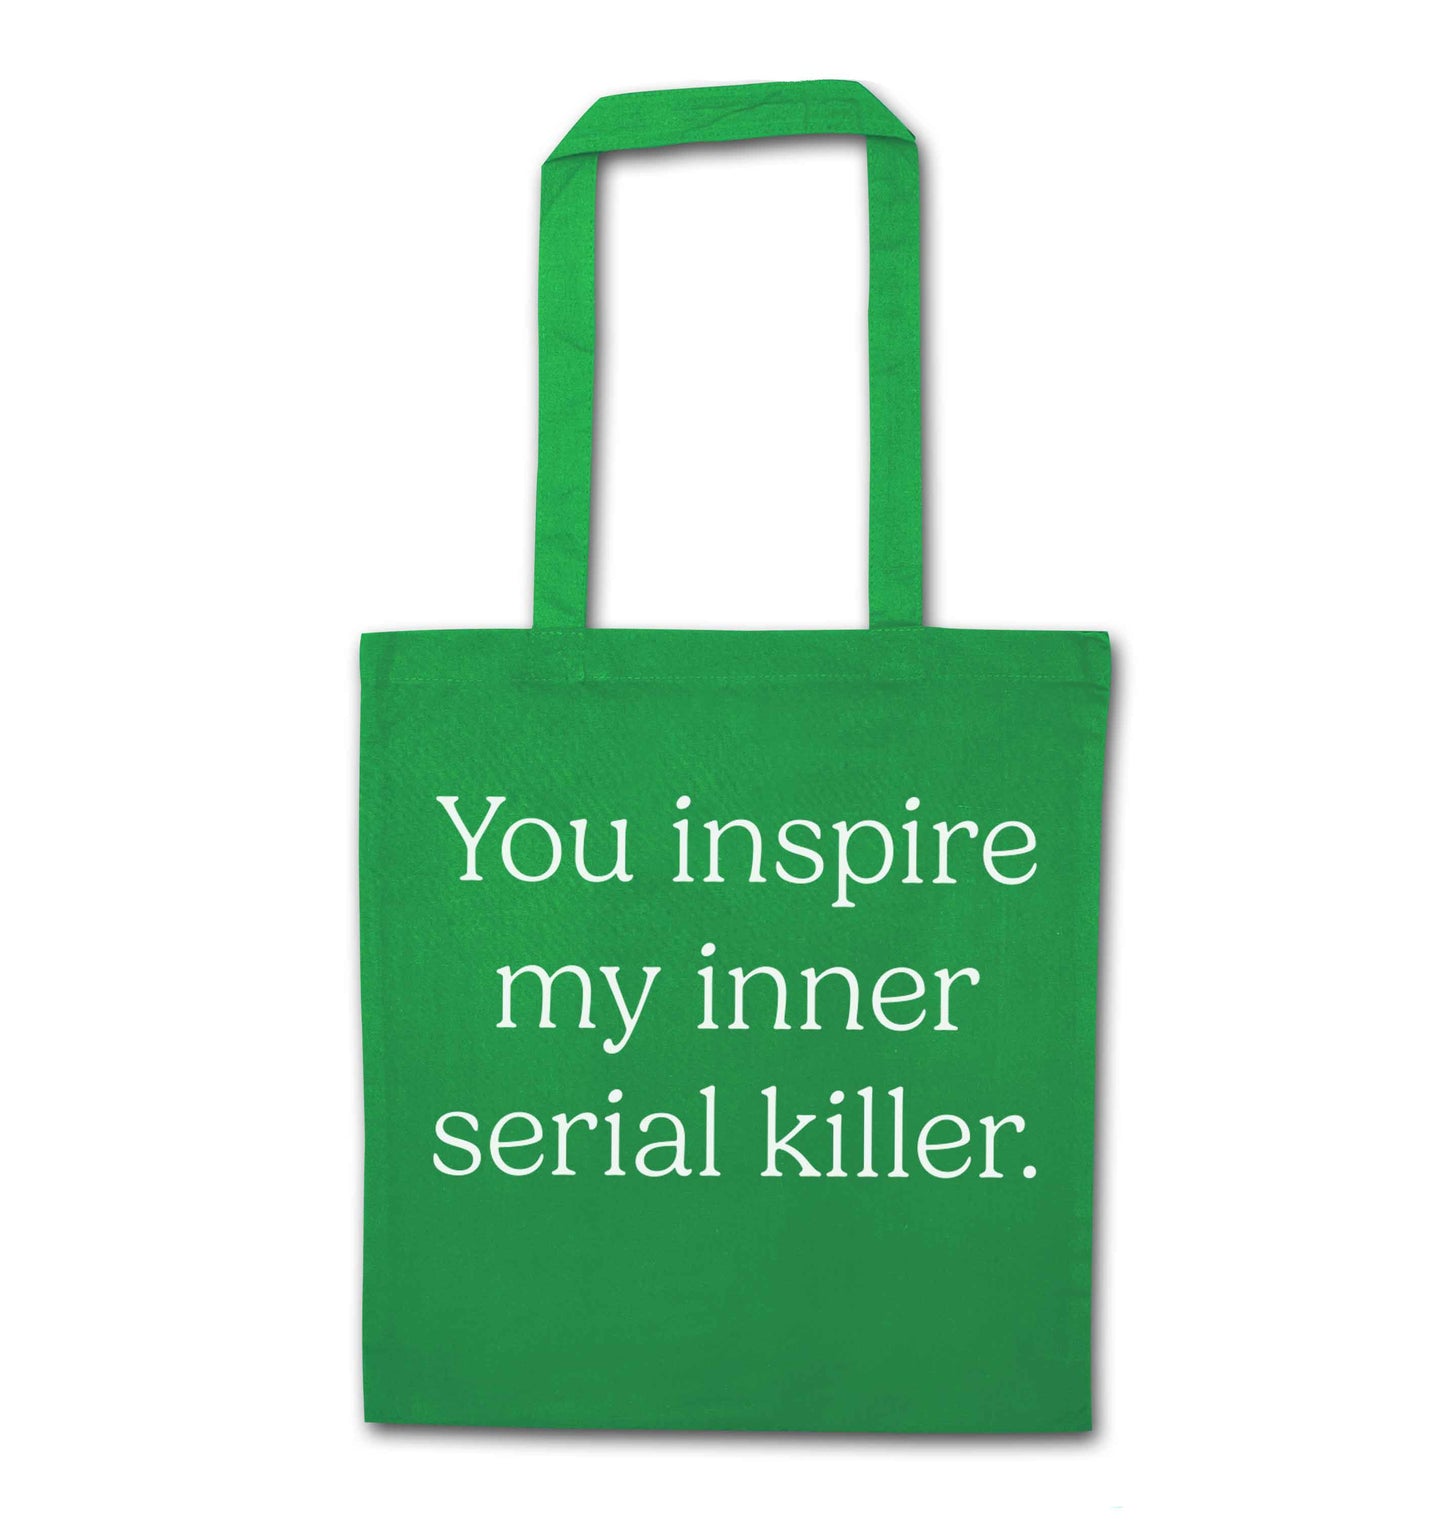 You inspire my inner serial killer Kit green tote bag